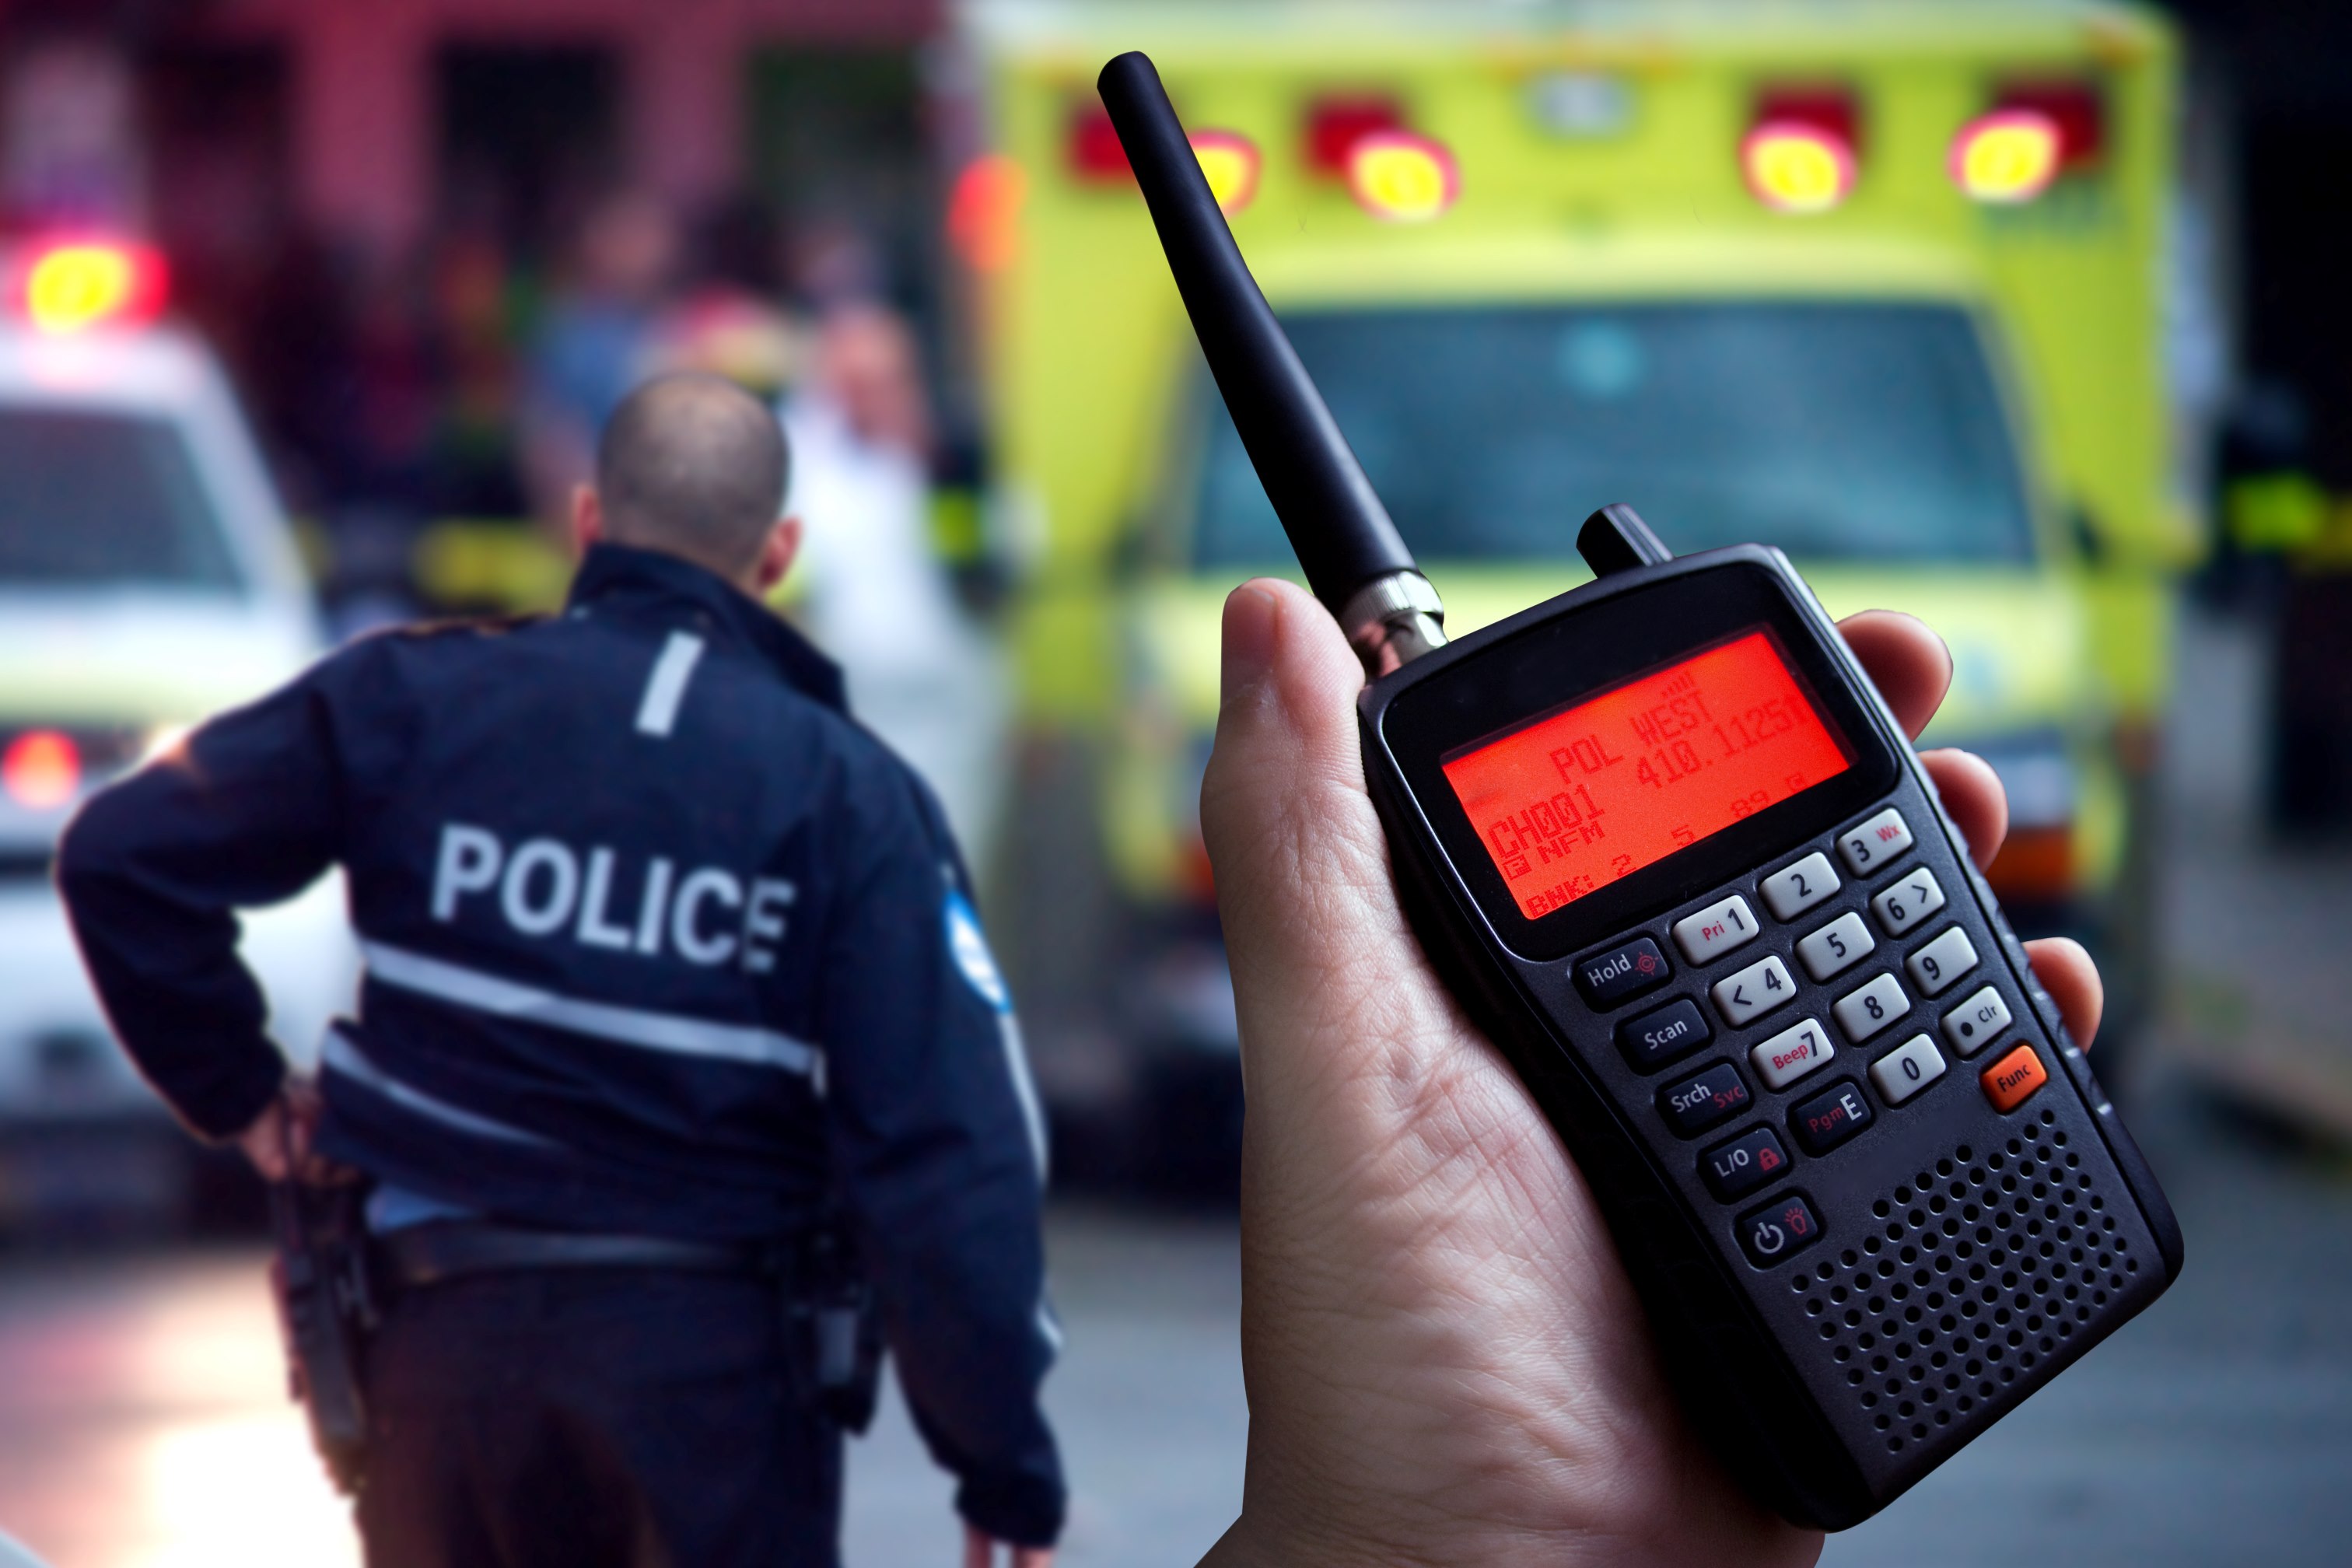 police and ambulance service with radio